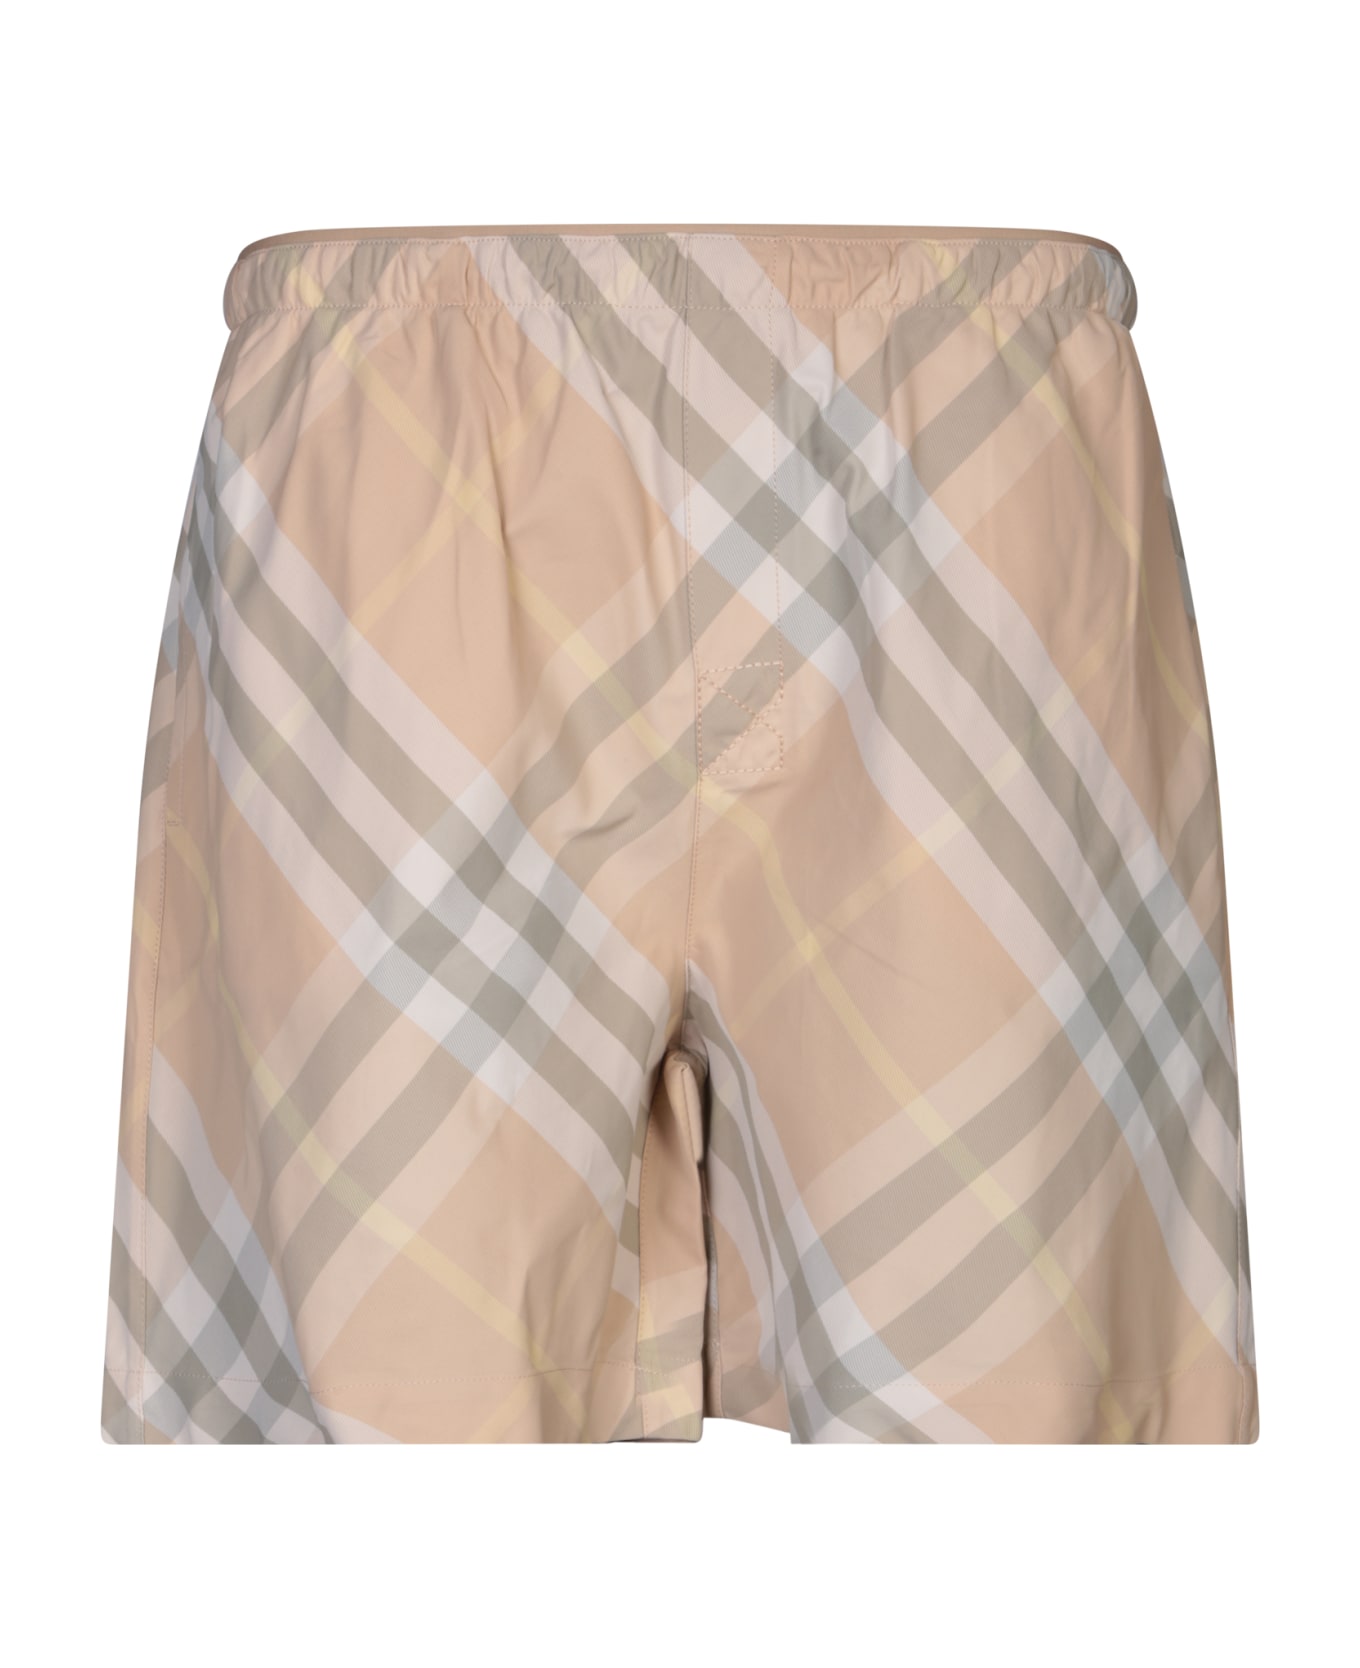 Burberry Check Swim Shorts - Beige